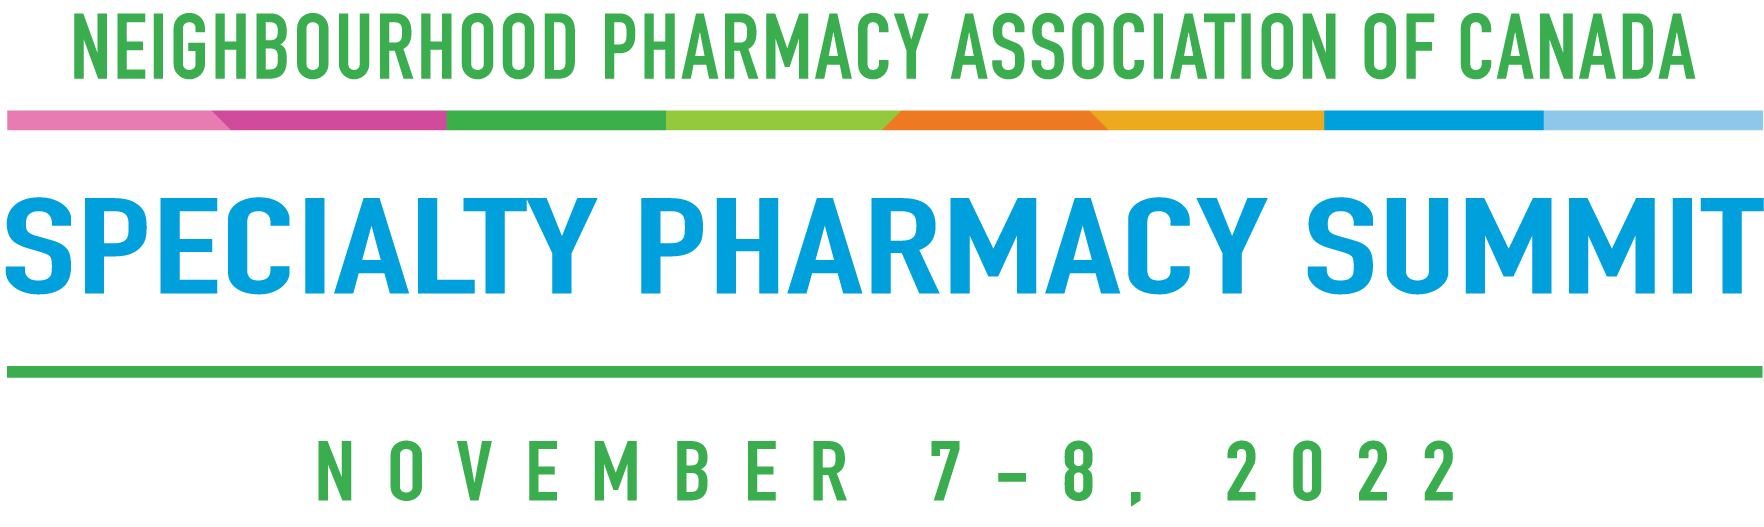 Specialty Pharmacy Summit Neighbourhood Pharmacies